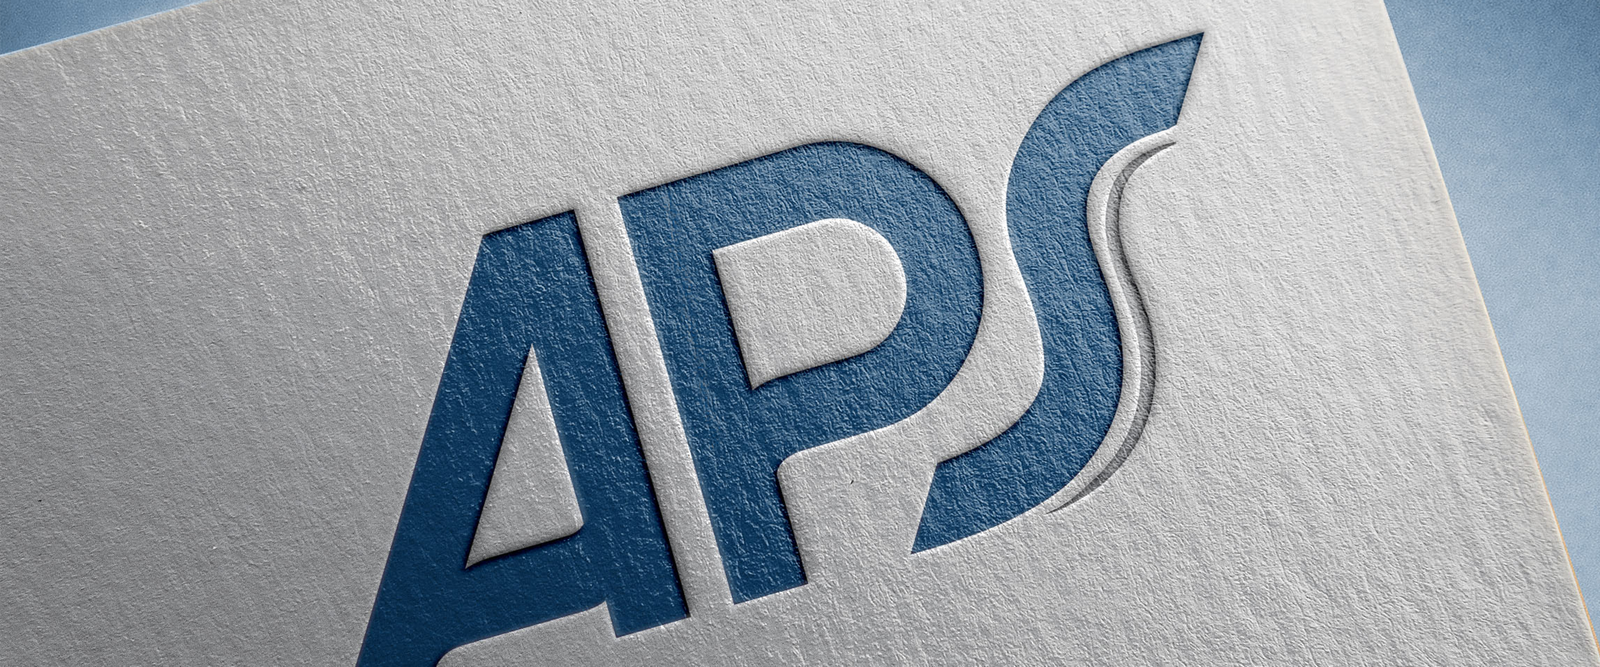 APS singapore logo design restyle